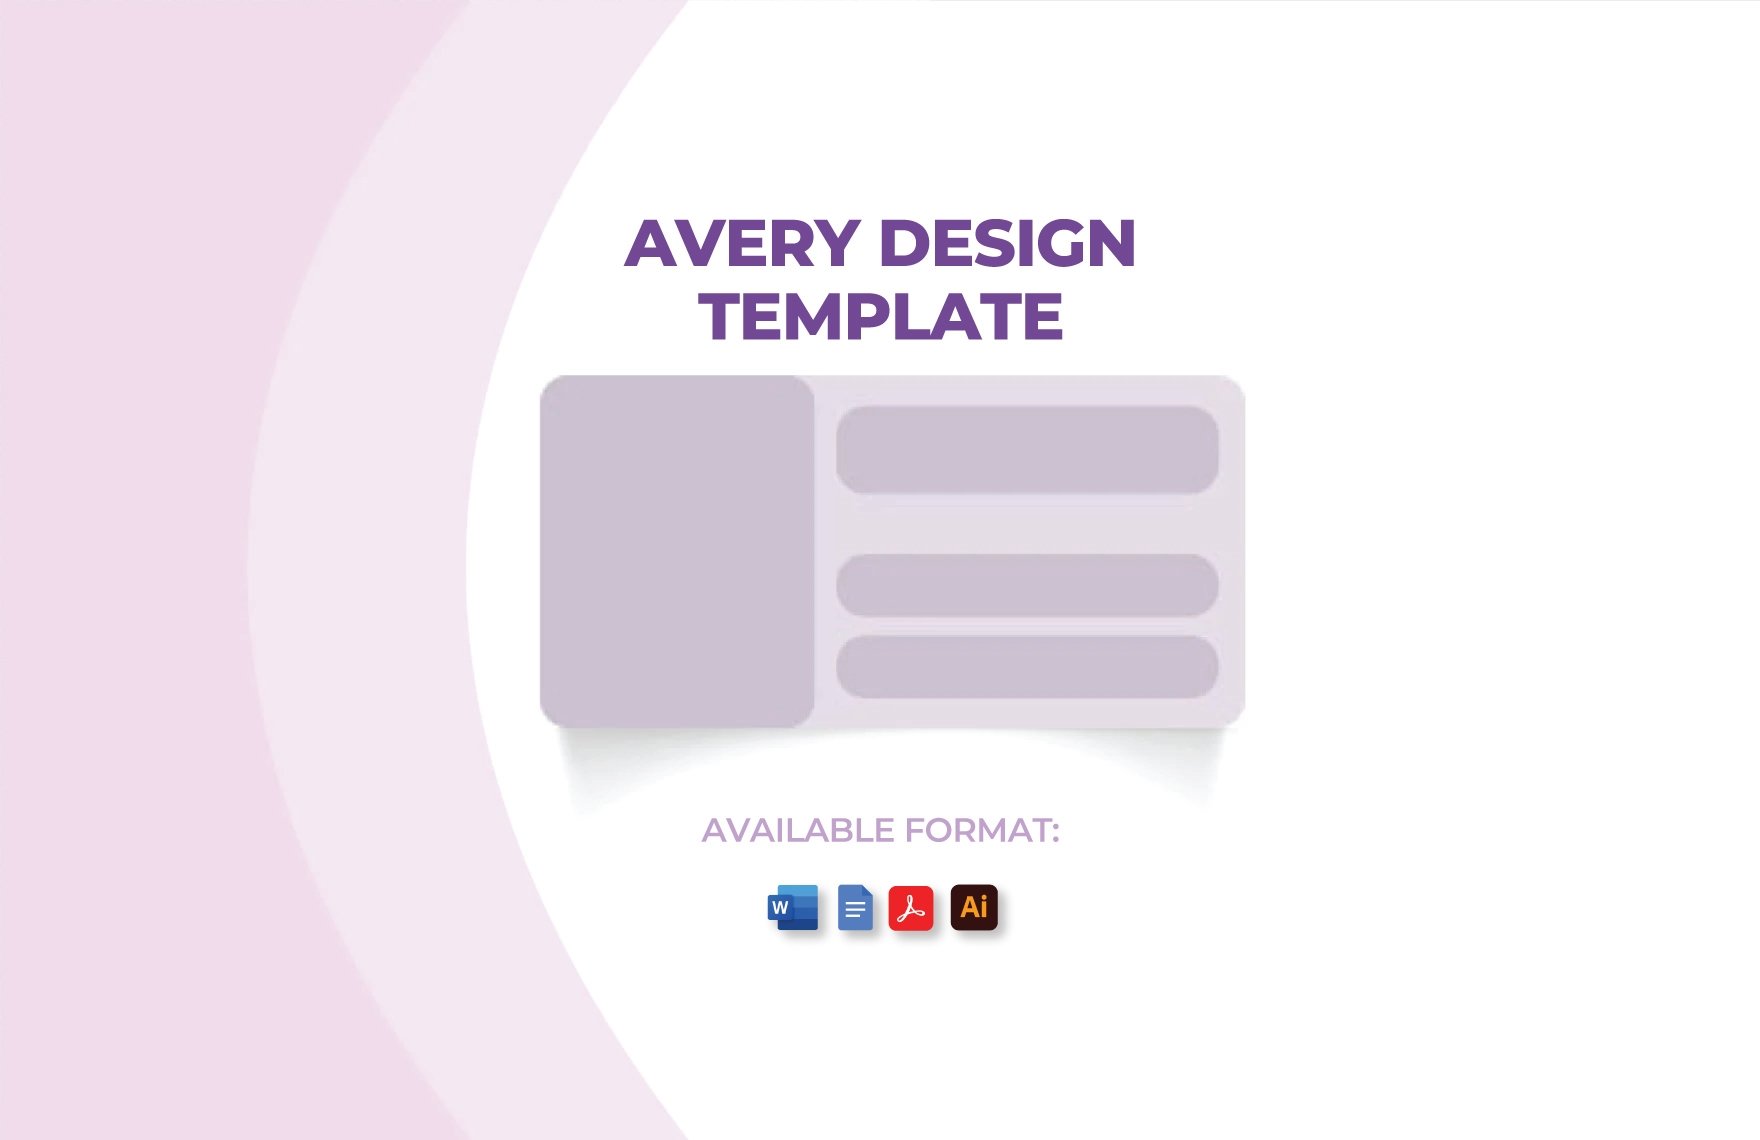 Free Avery Design Template